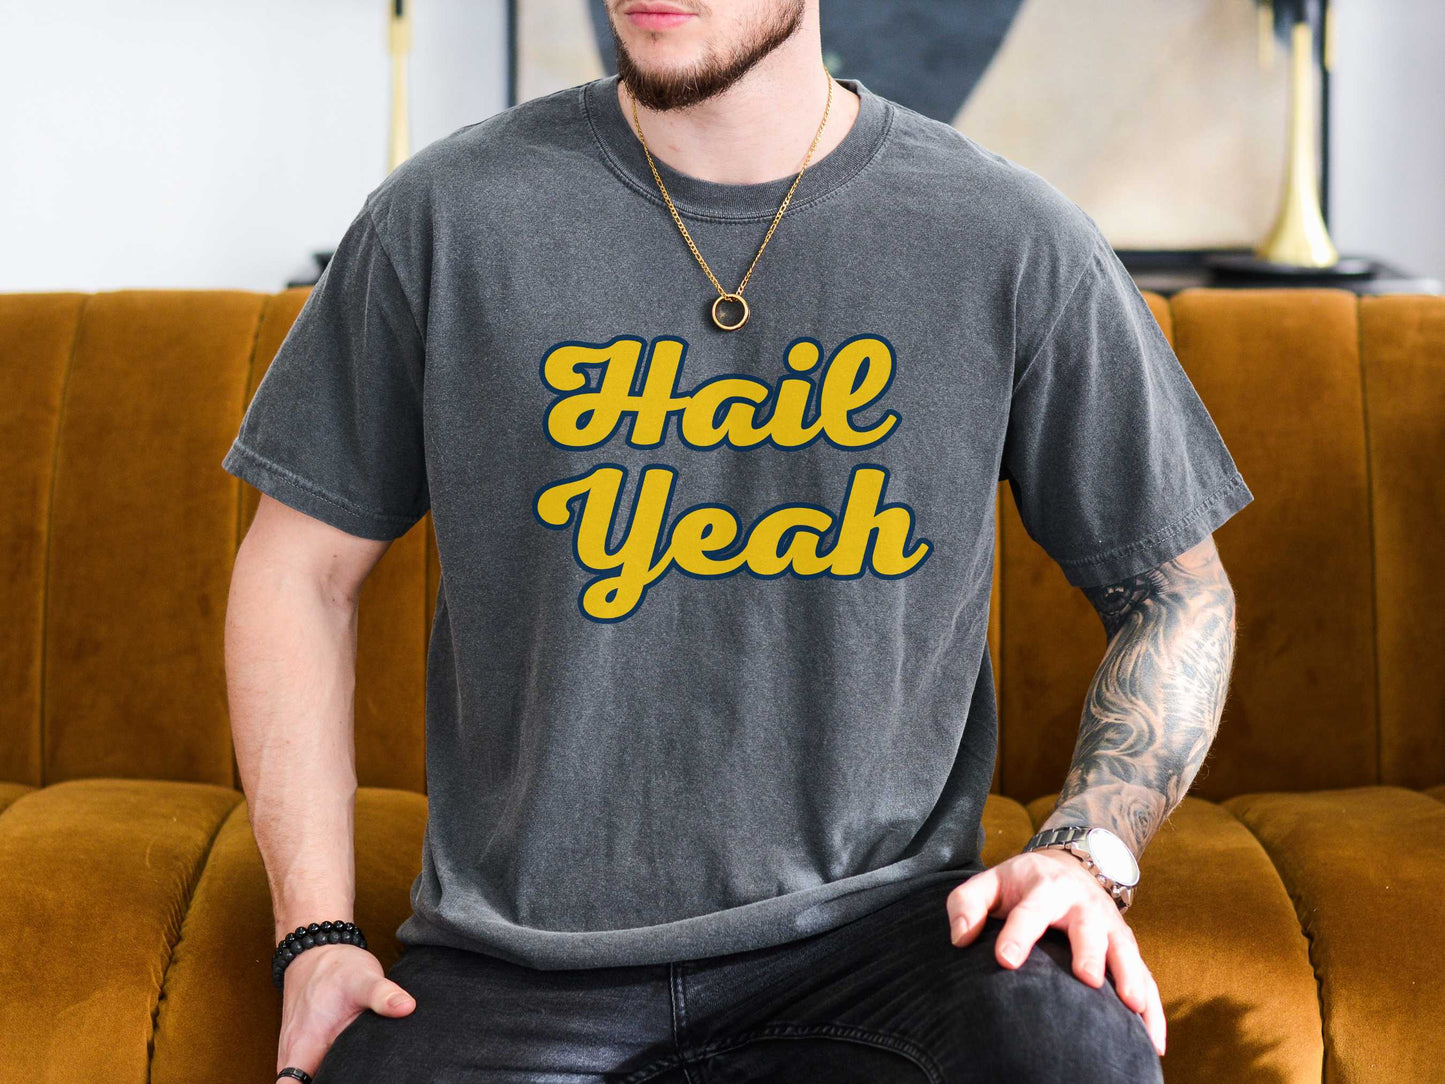 U of M "Hail Yeah" T-Shirt in Pepper